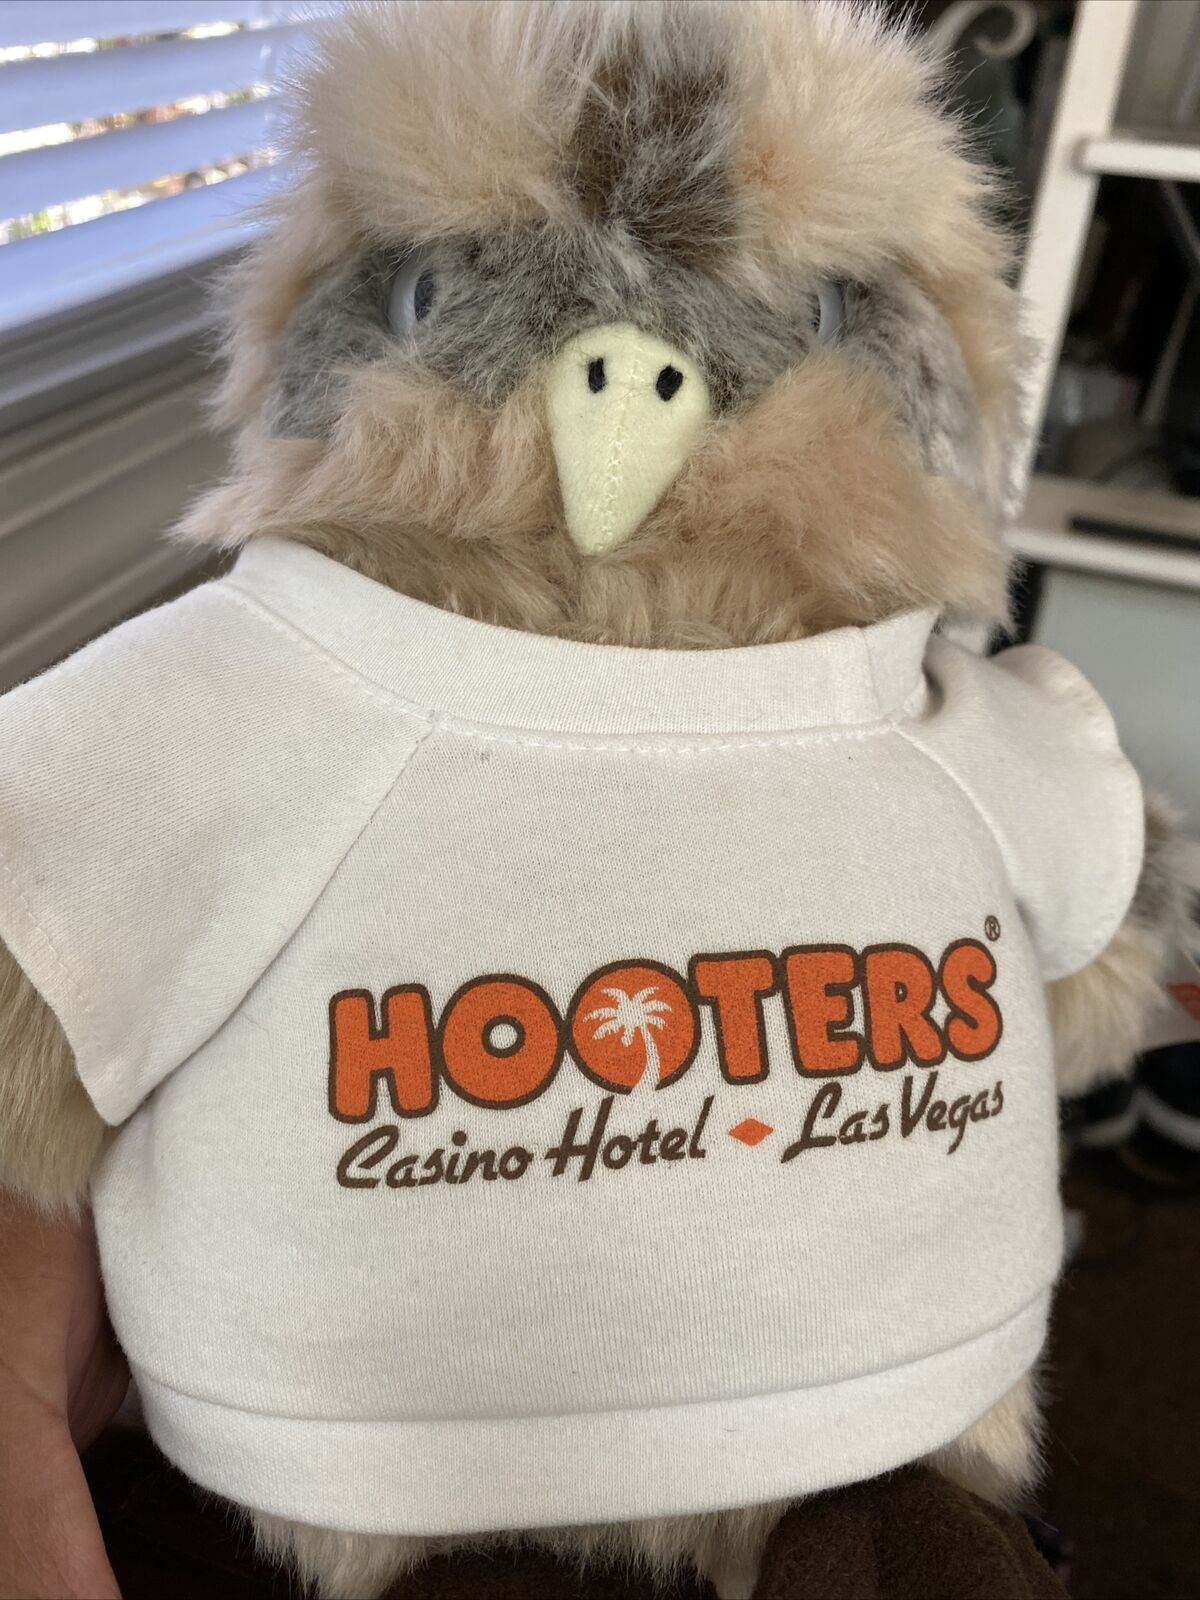 Gund Hooters Owl Stuffed Plush Casino Hotel Las Vegas Hard Eyes Soft Body Fur